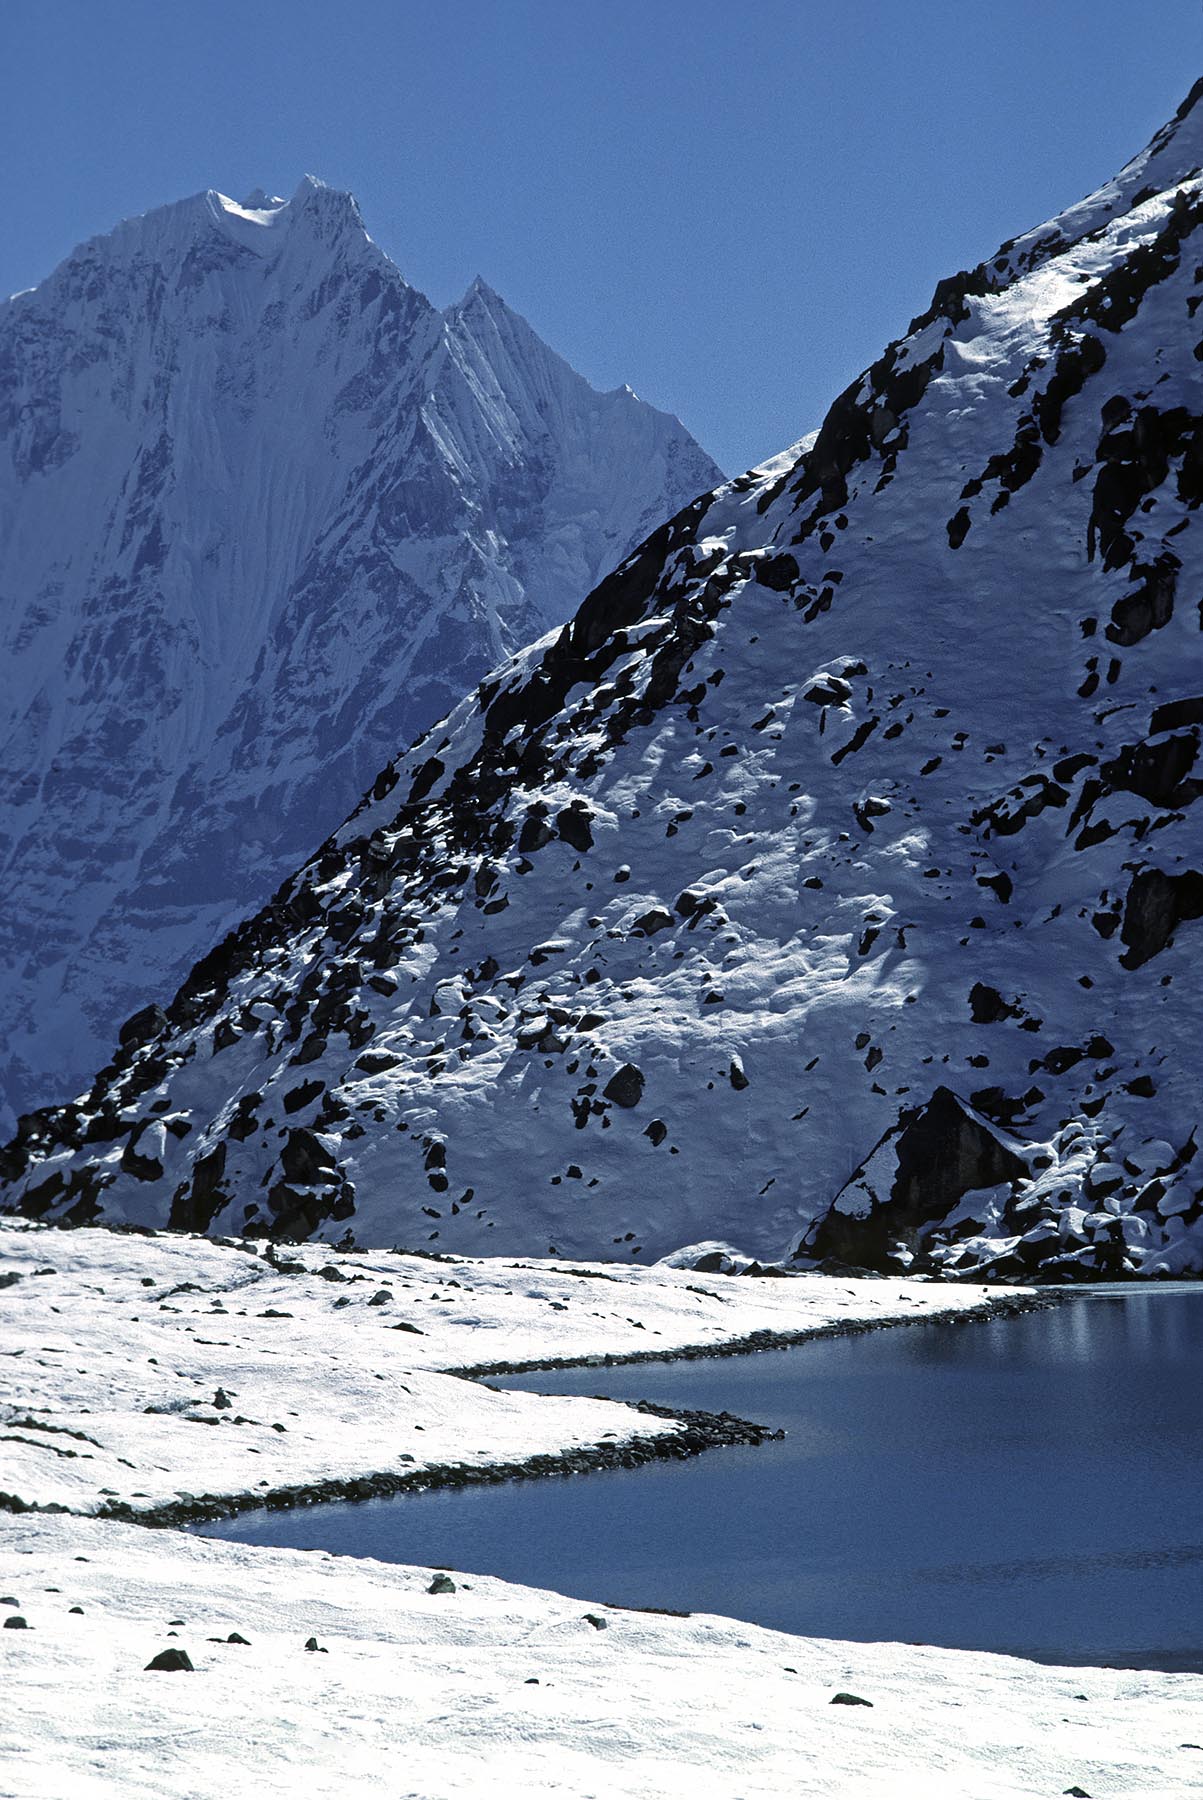 Dhud Pokhari (milk lake), with Thamserku Peak in the background - Gokyo, KHUMBU DISTRICT, NEPAL